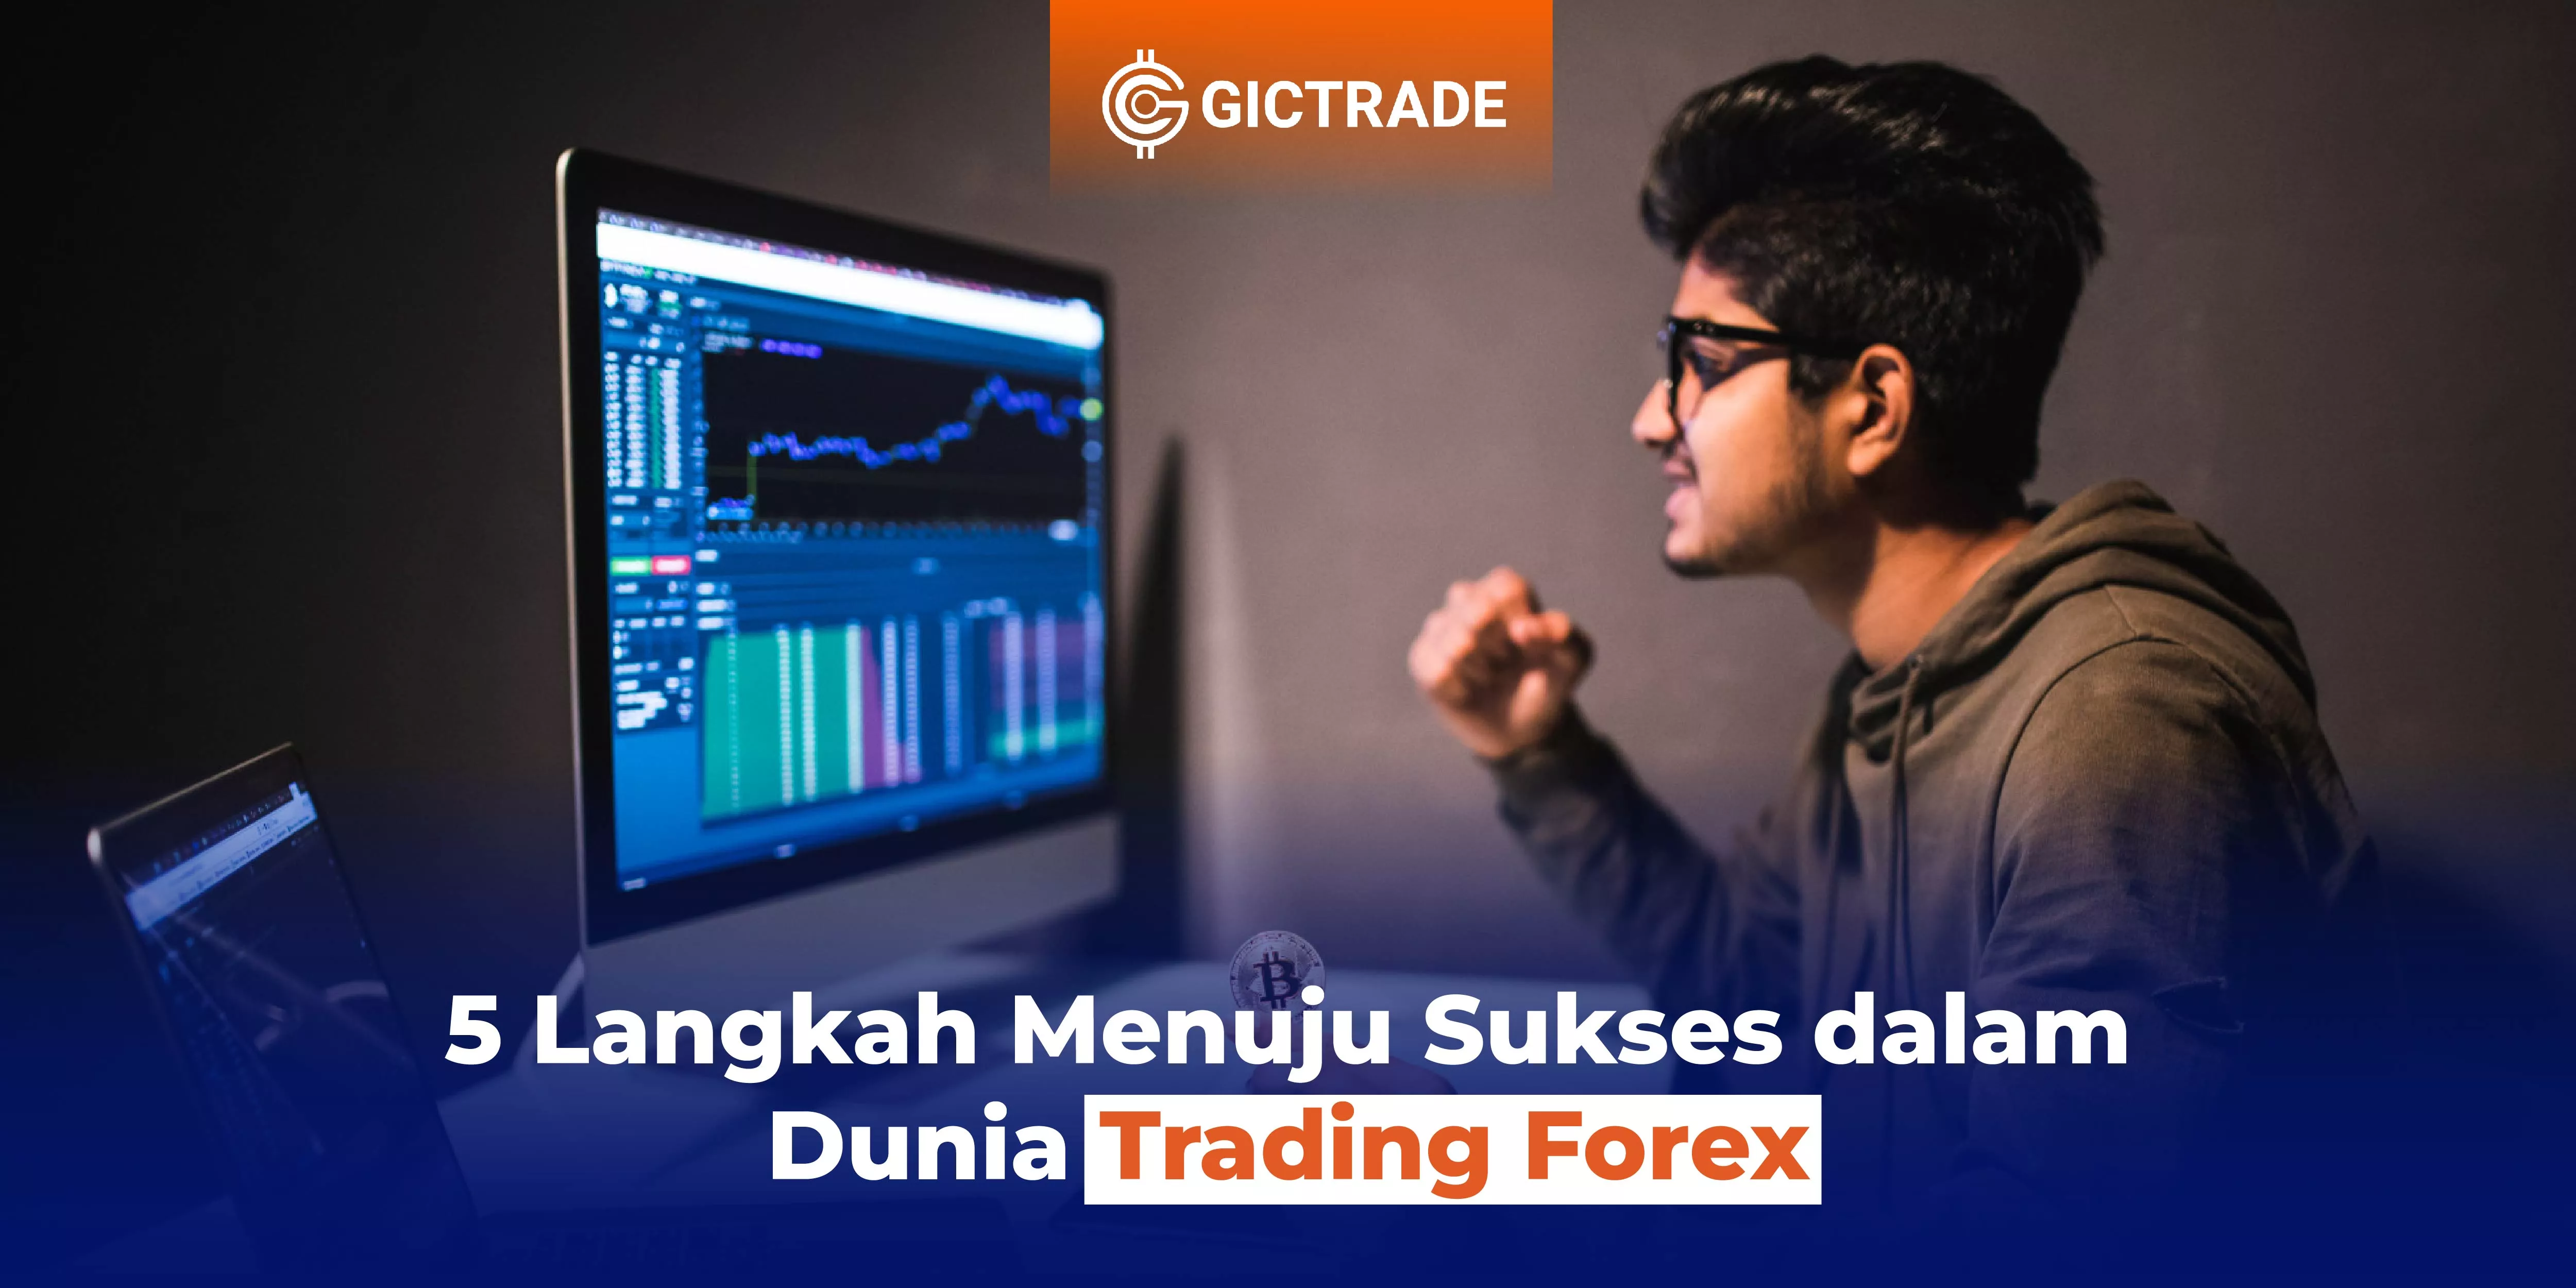 Sukses dalam trading forex